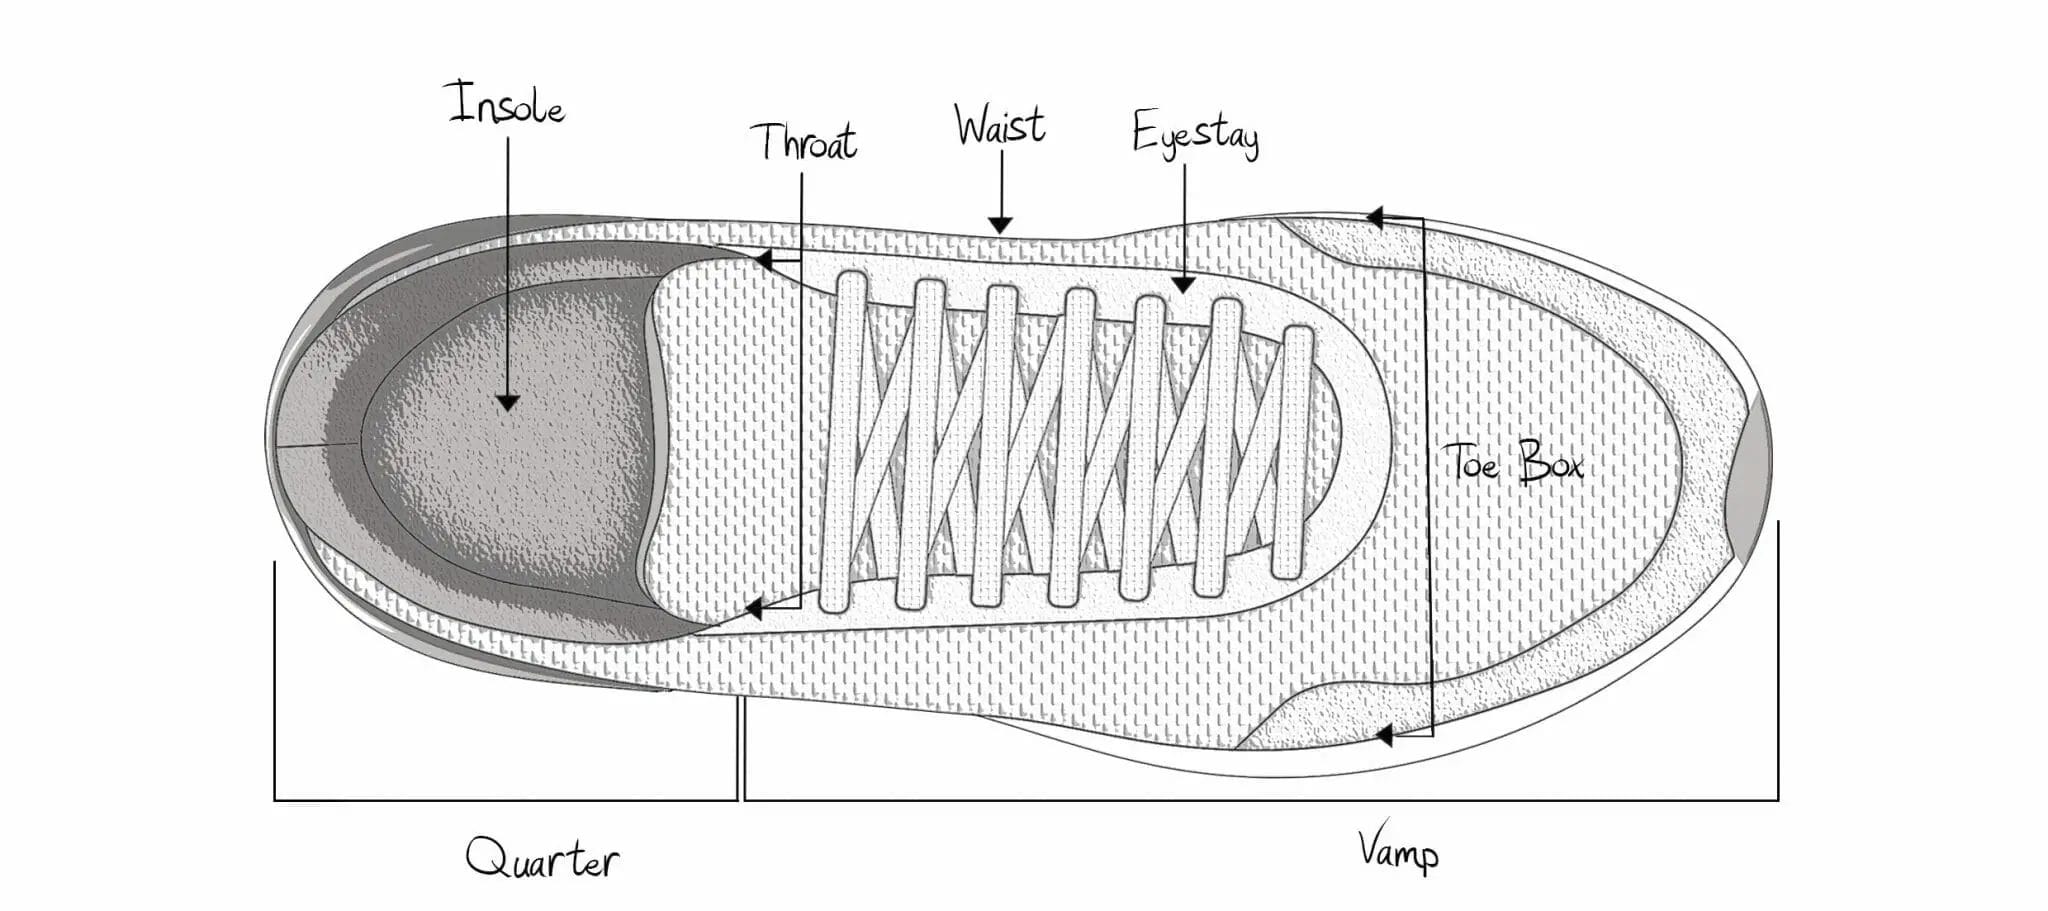 Anatomy of the Shoe